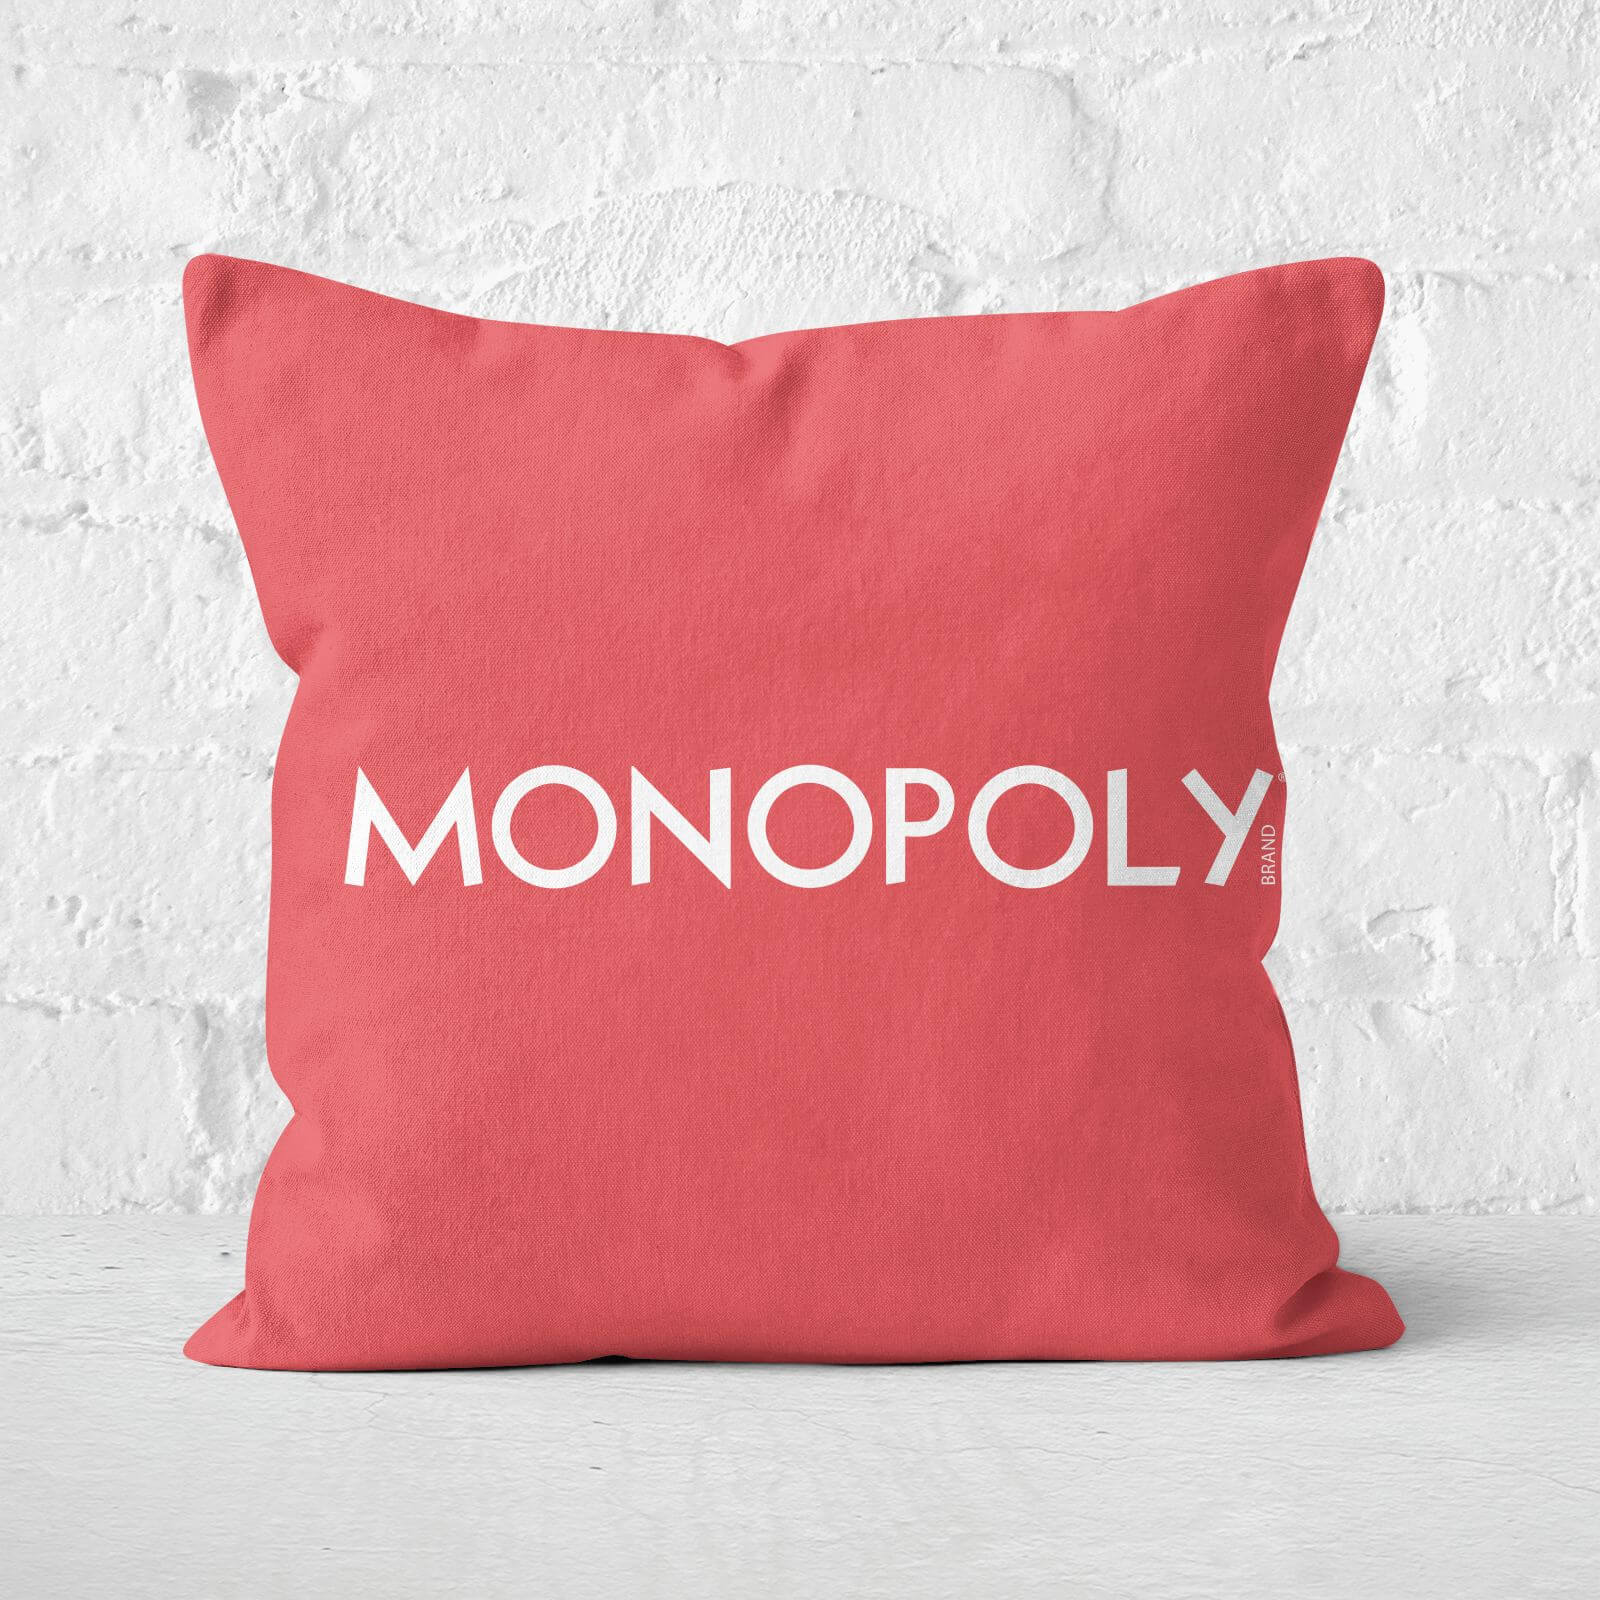 Monopoly Go Square Cushion - 60x60cm - Soft Touch